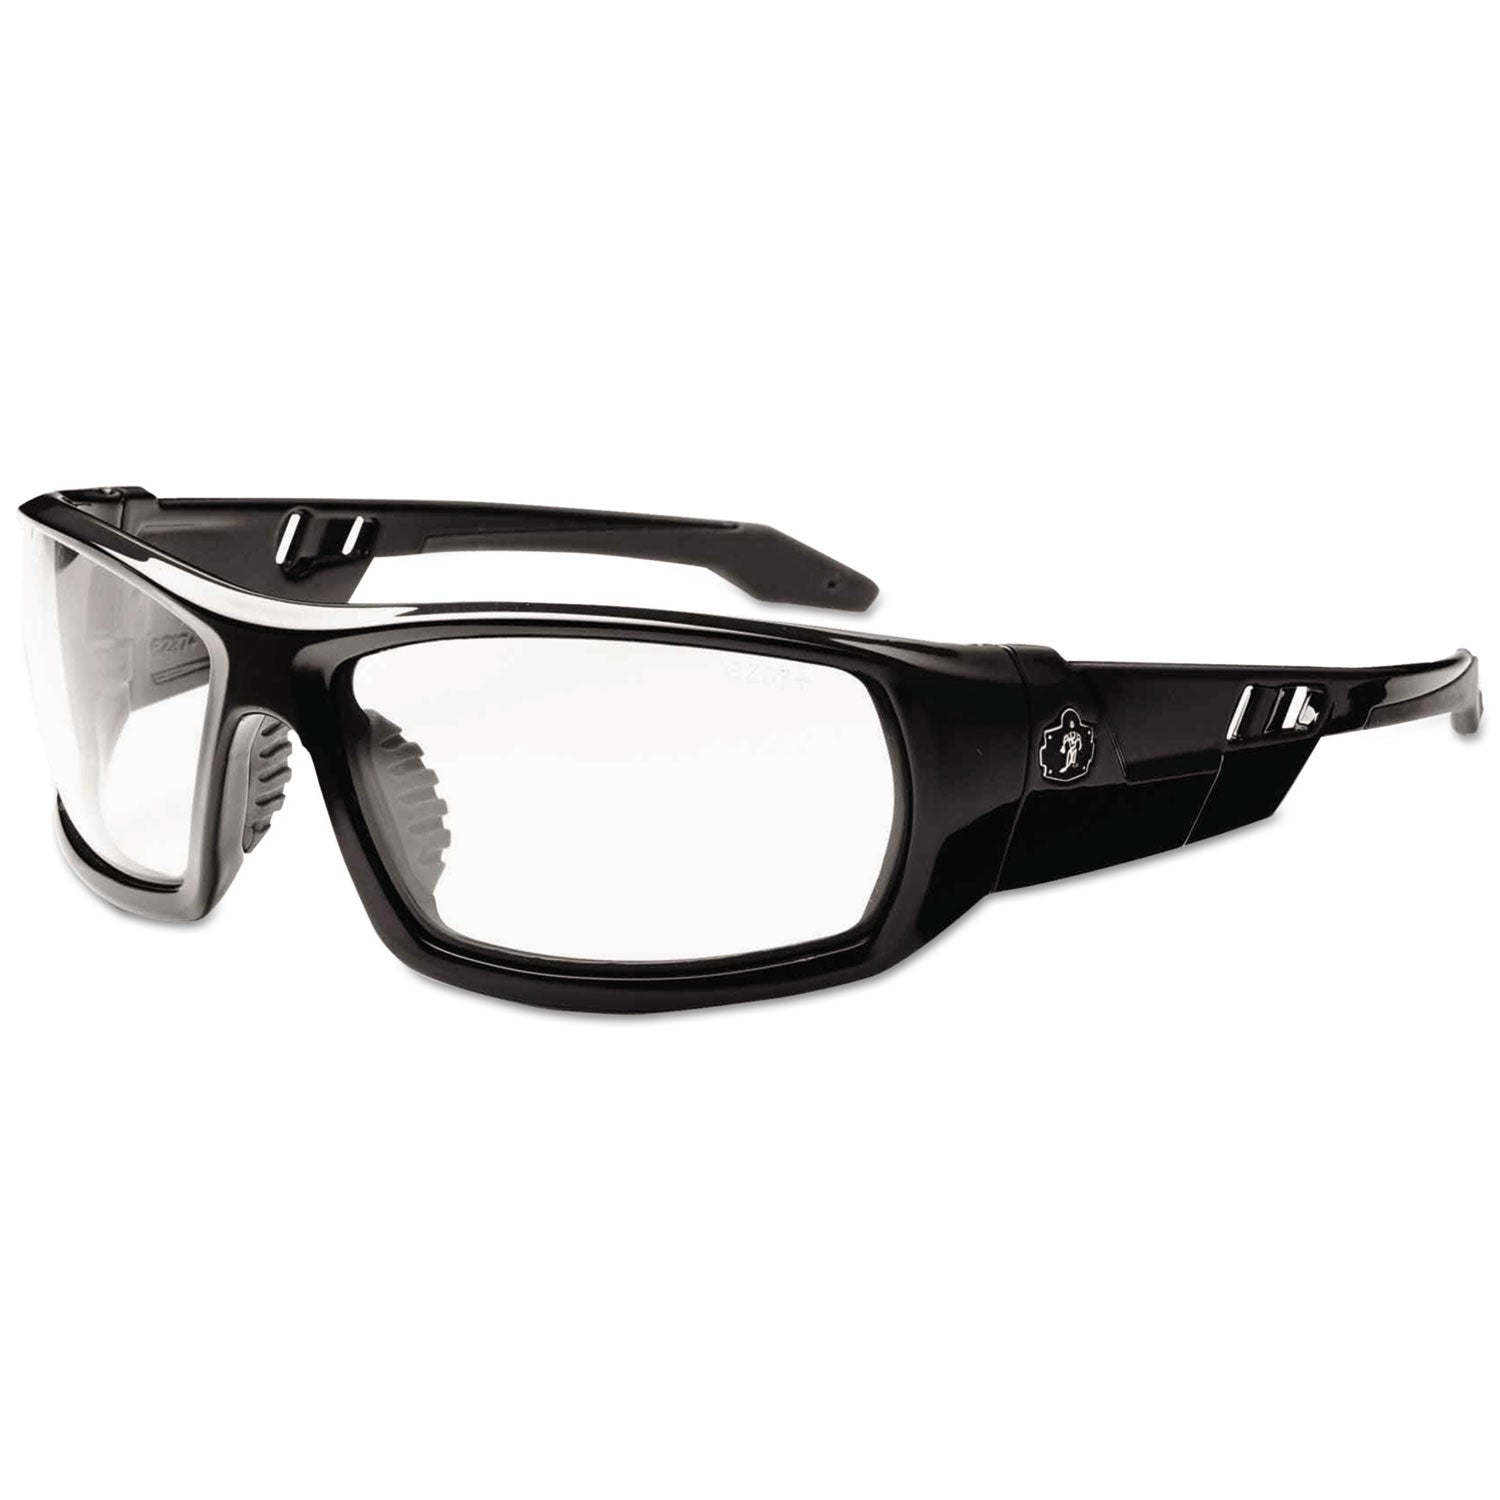 skullerz-odin-safety-glasses-black-frame-clear-lens-nylon-polycarb-ships-in-1-3-business-days_ego50000 - 1